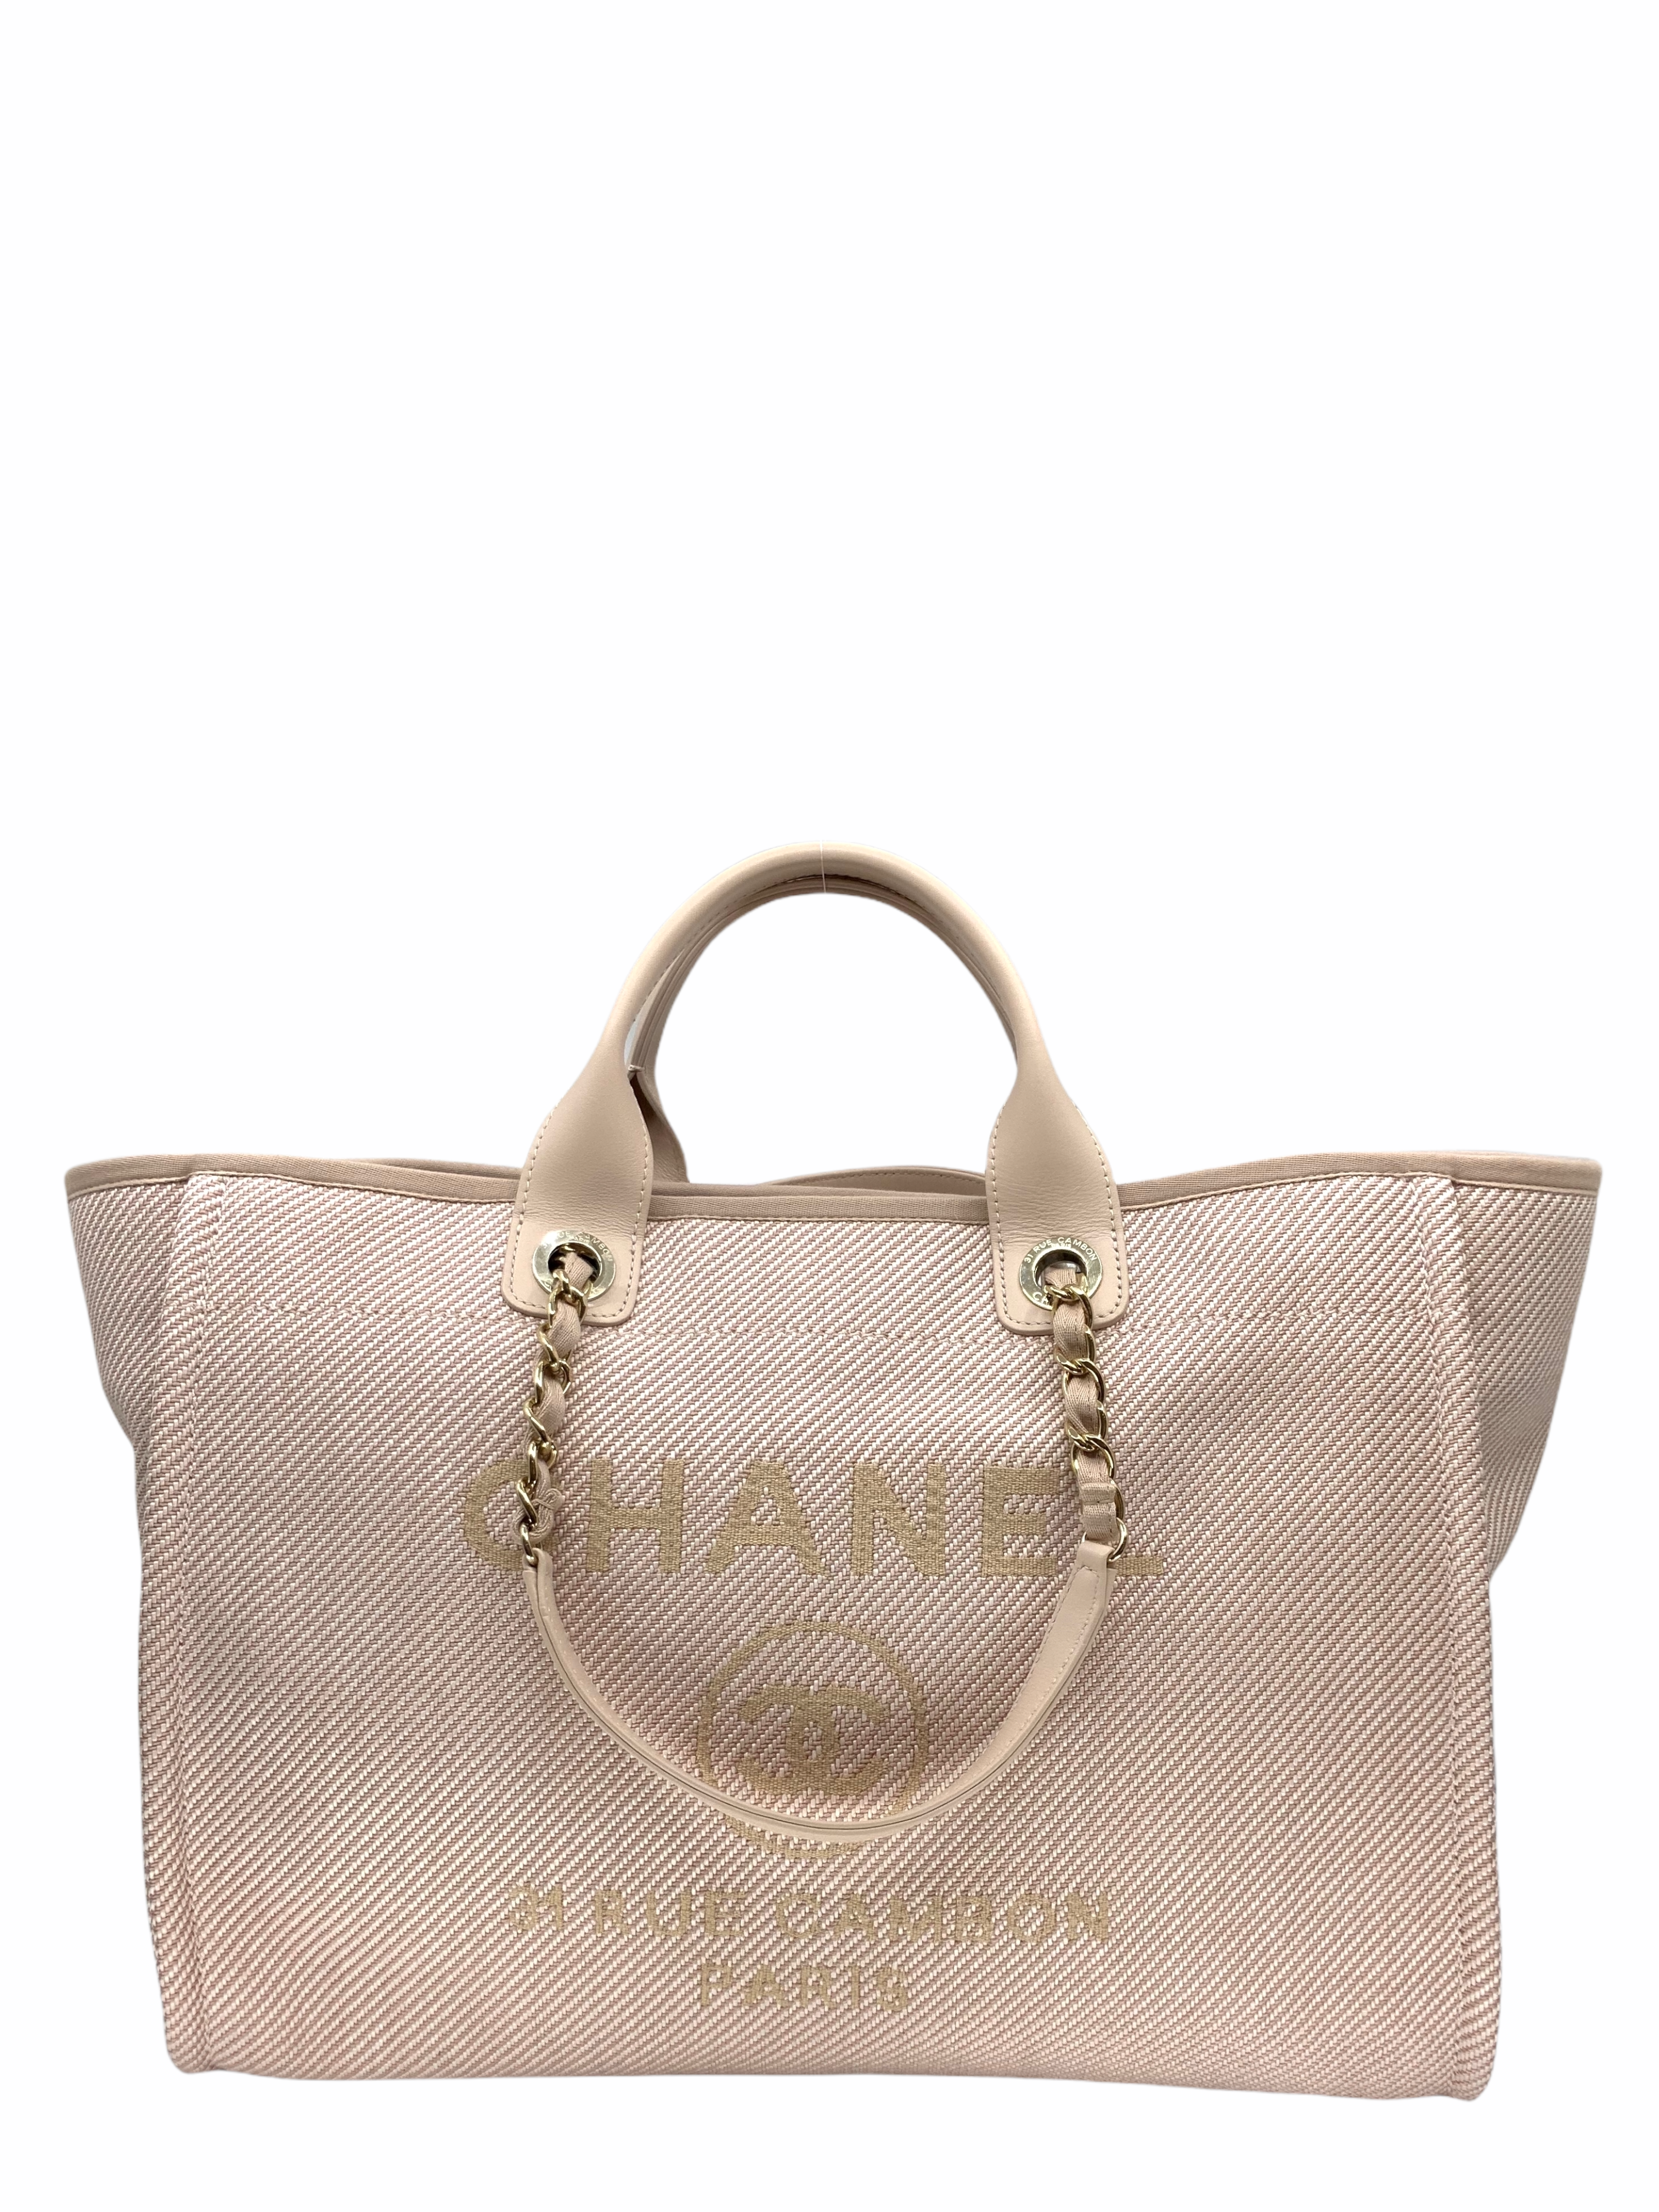 Chanel Medium Deauville Grey Glitter Lurex Tote Bag – Coco Approved Studio